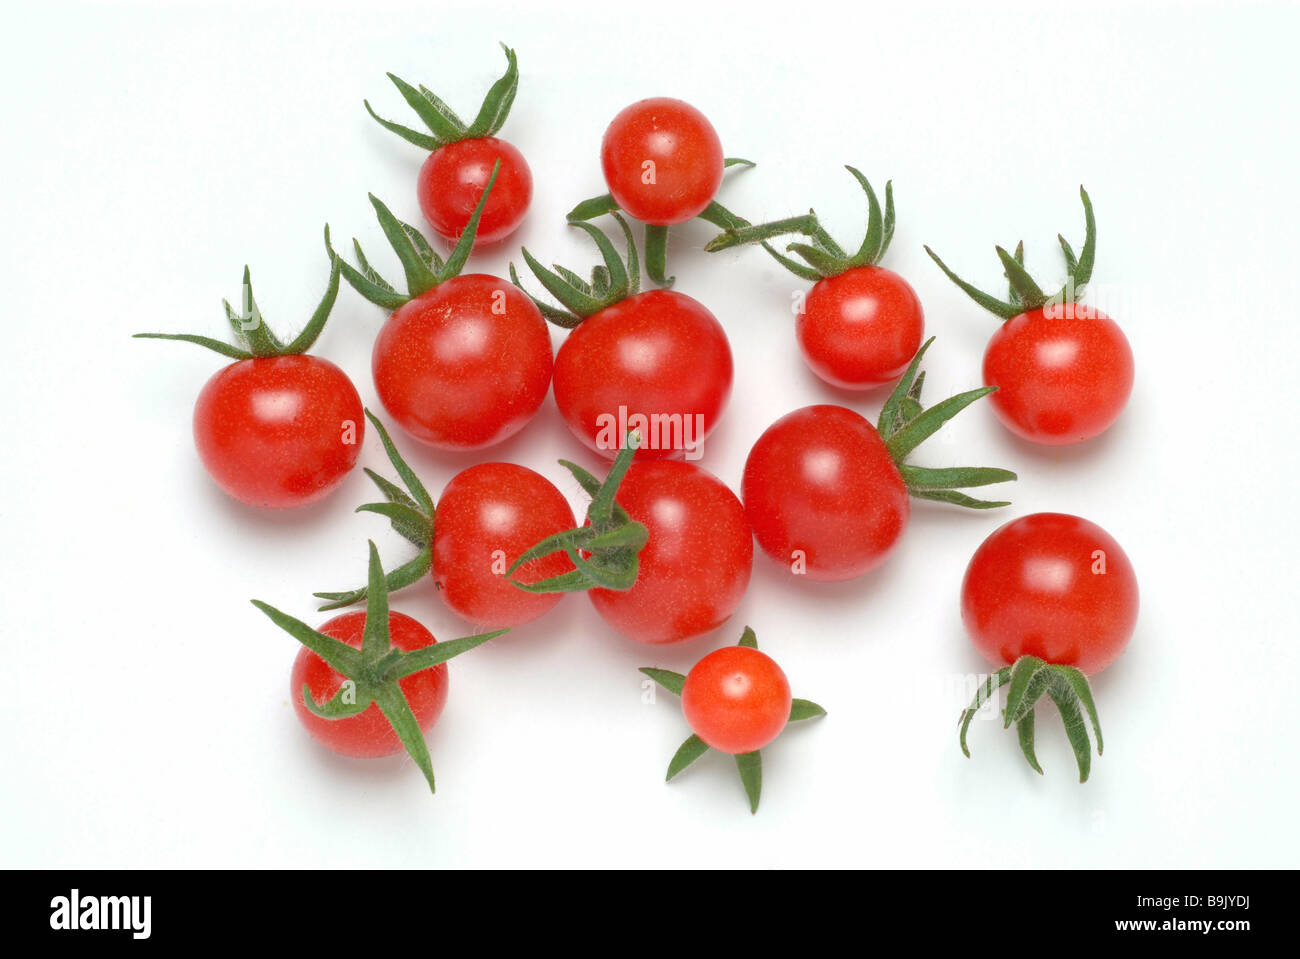 Tomatoes cherrytomatoe Lycopersicon esculentum Stock Photo